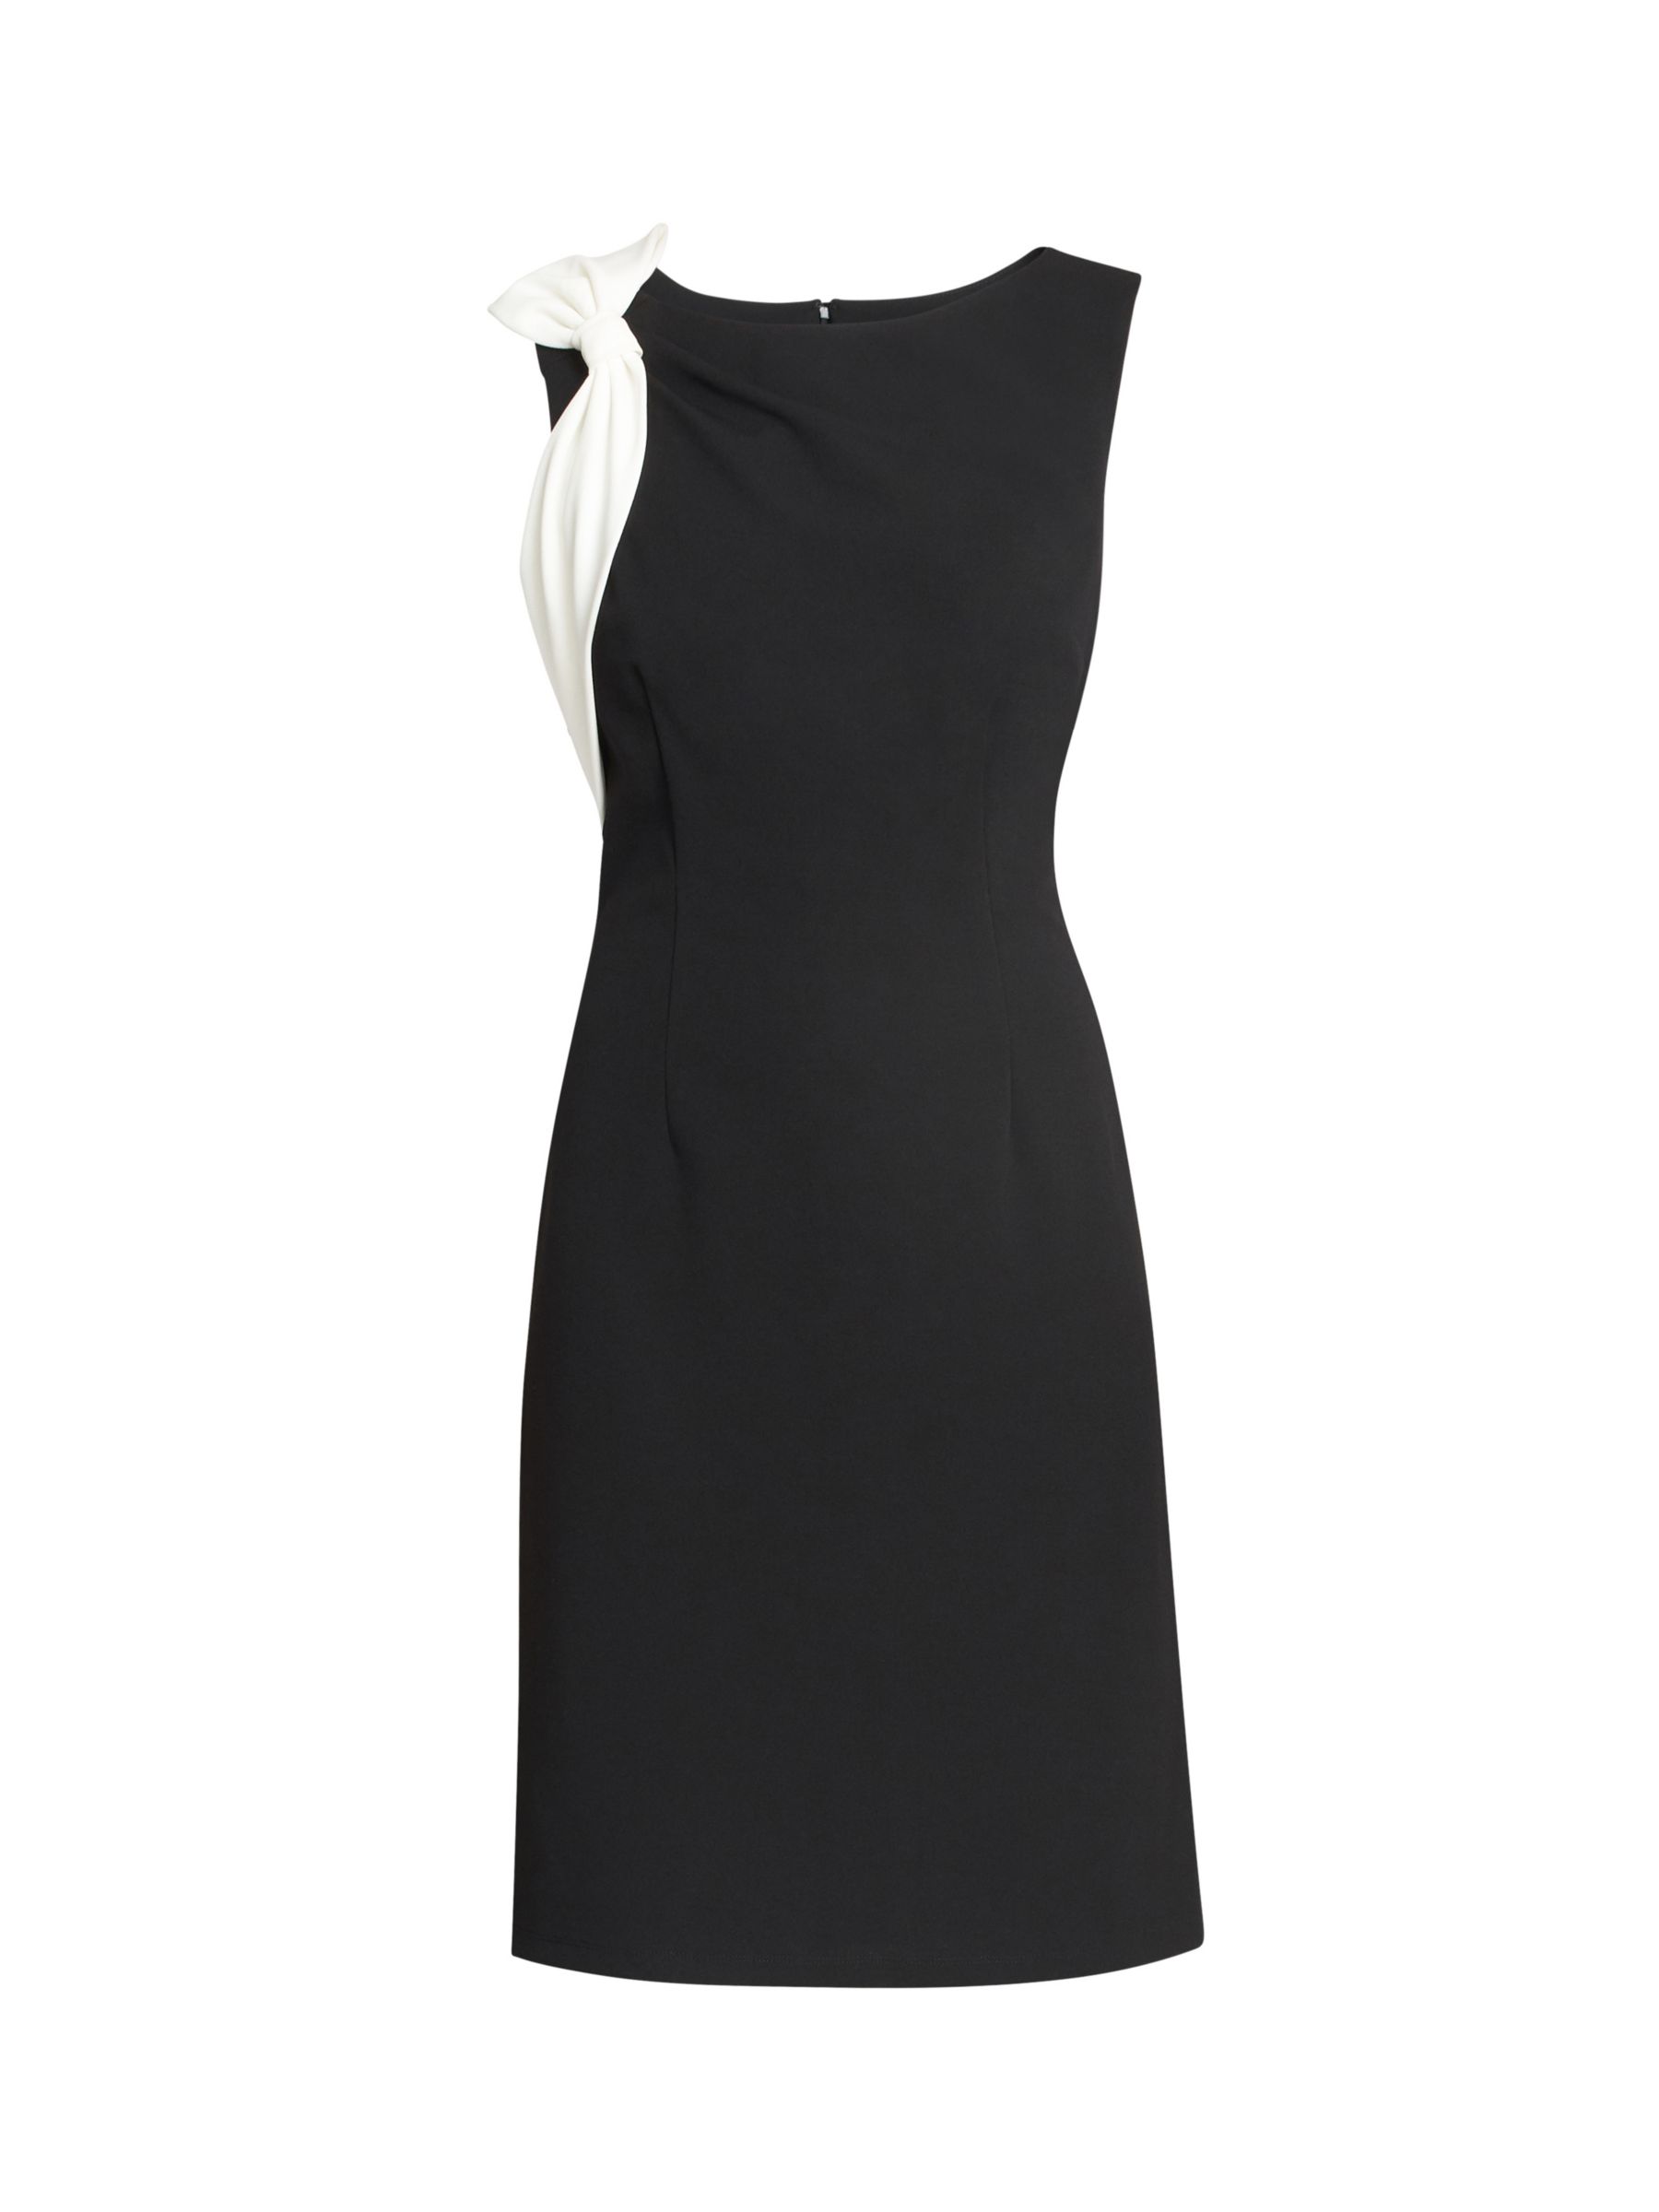 Gina Bacconi Jaya Contrast Bow Shift Dress, Black/Ivory, 12